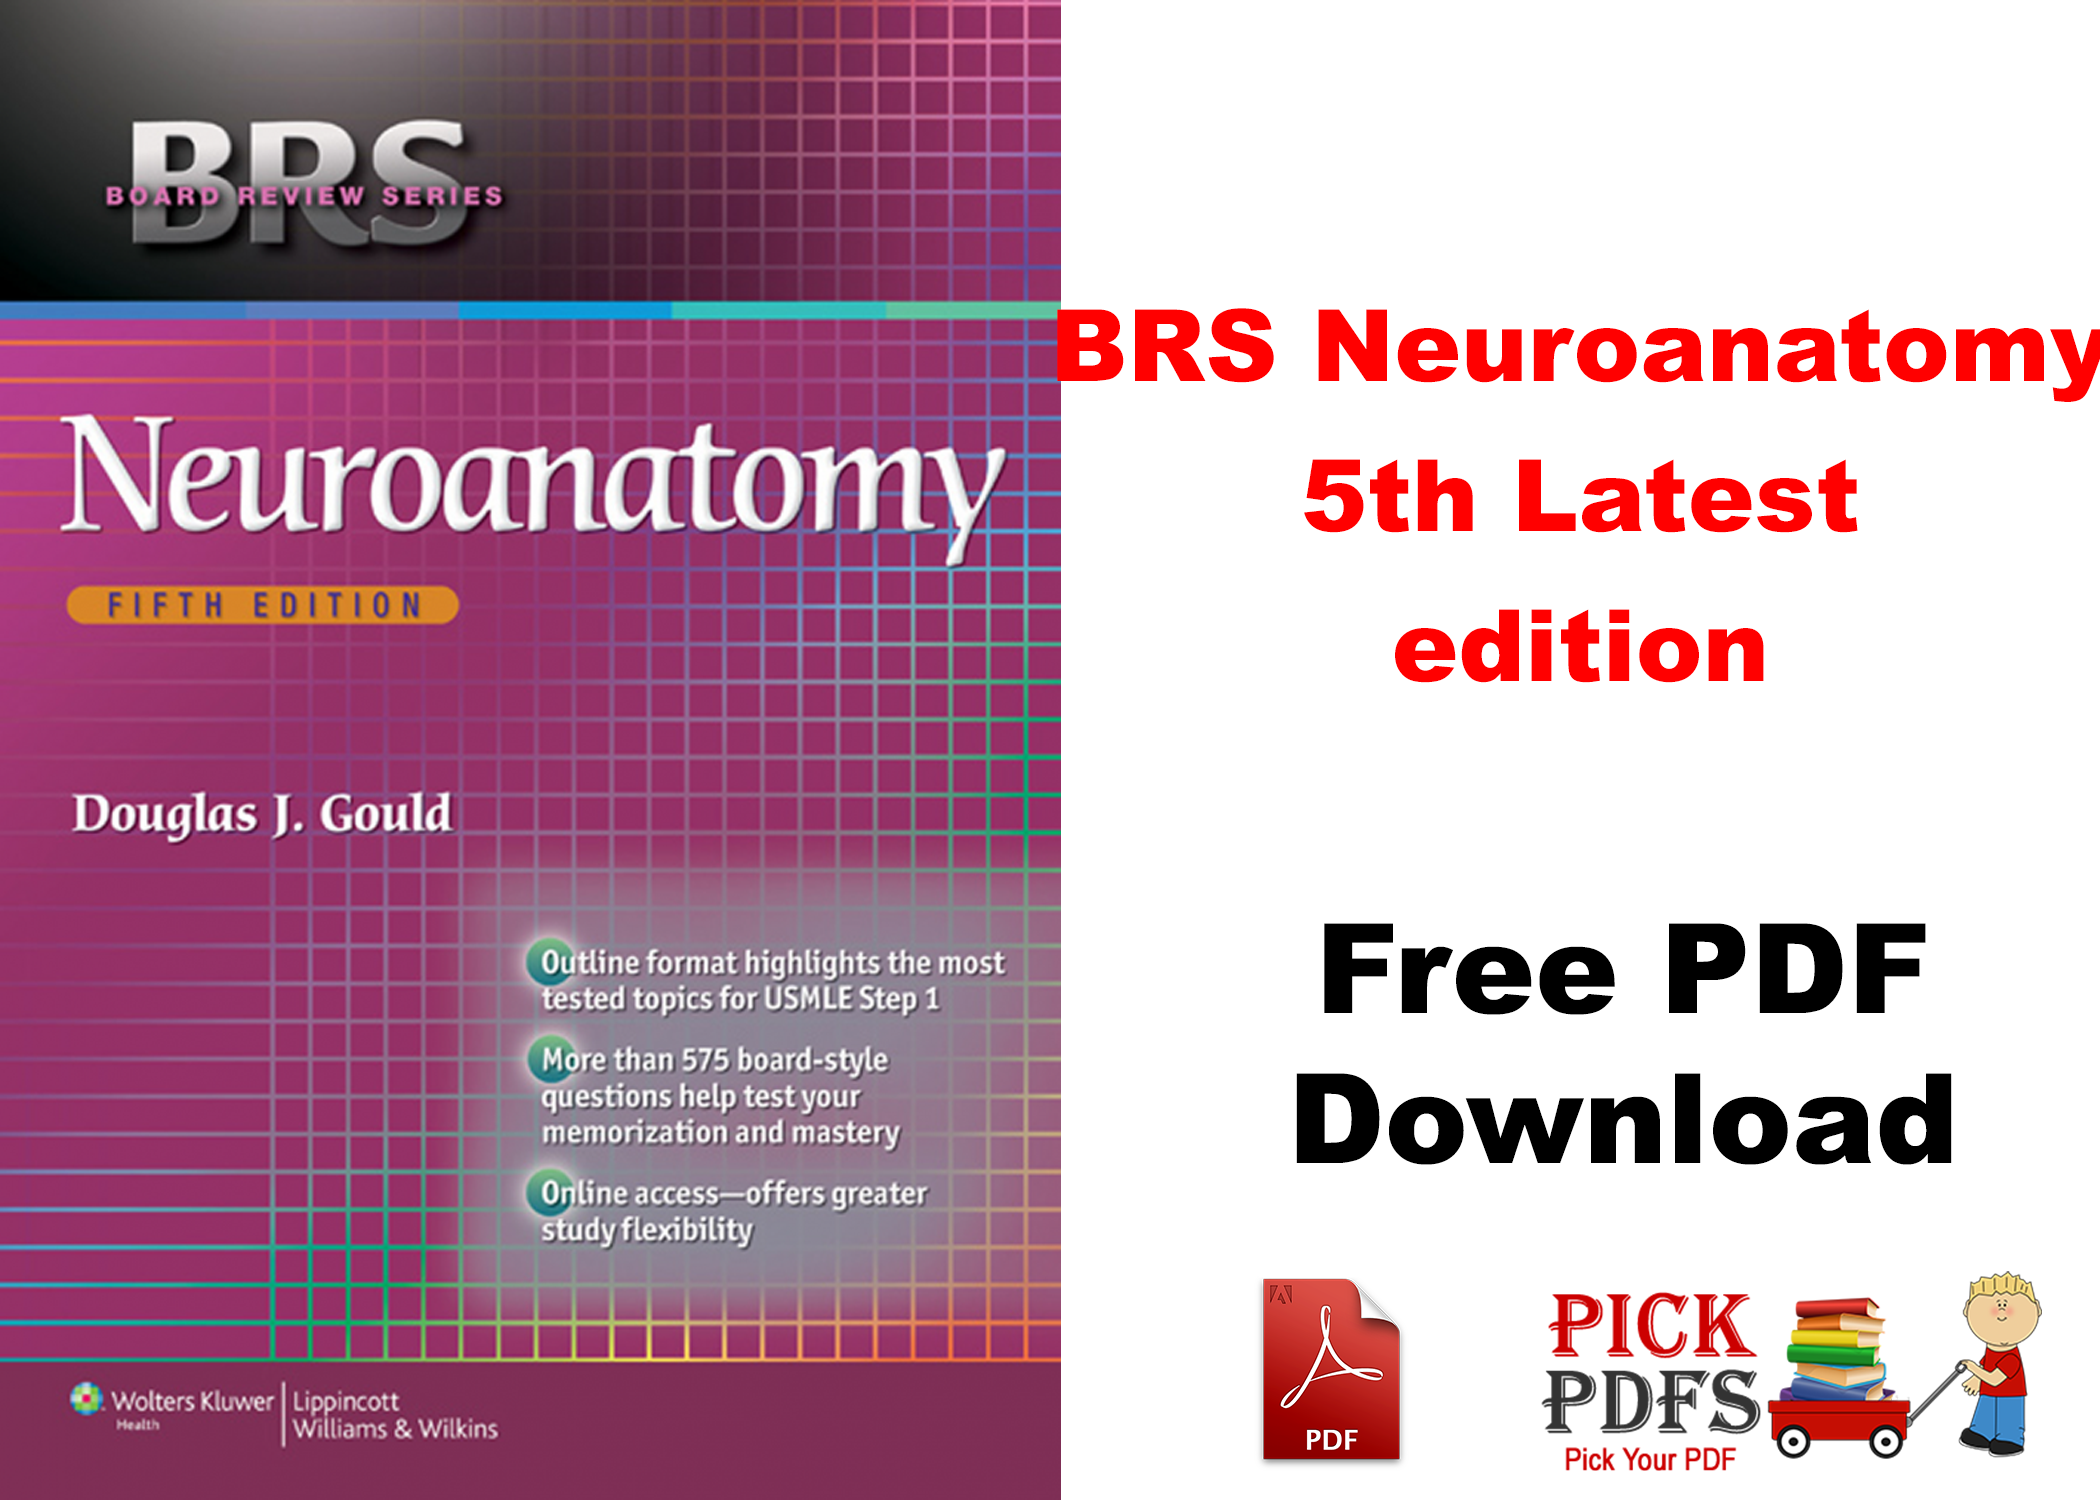 https://pickpdfs.com/neurosurgery-fundamentals-pdf-free-download2021/